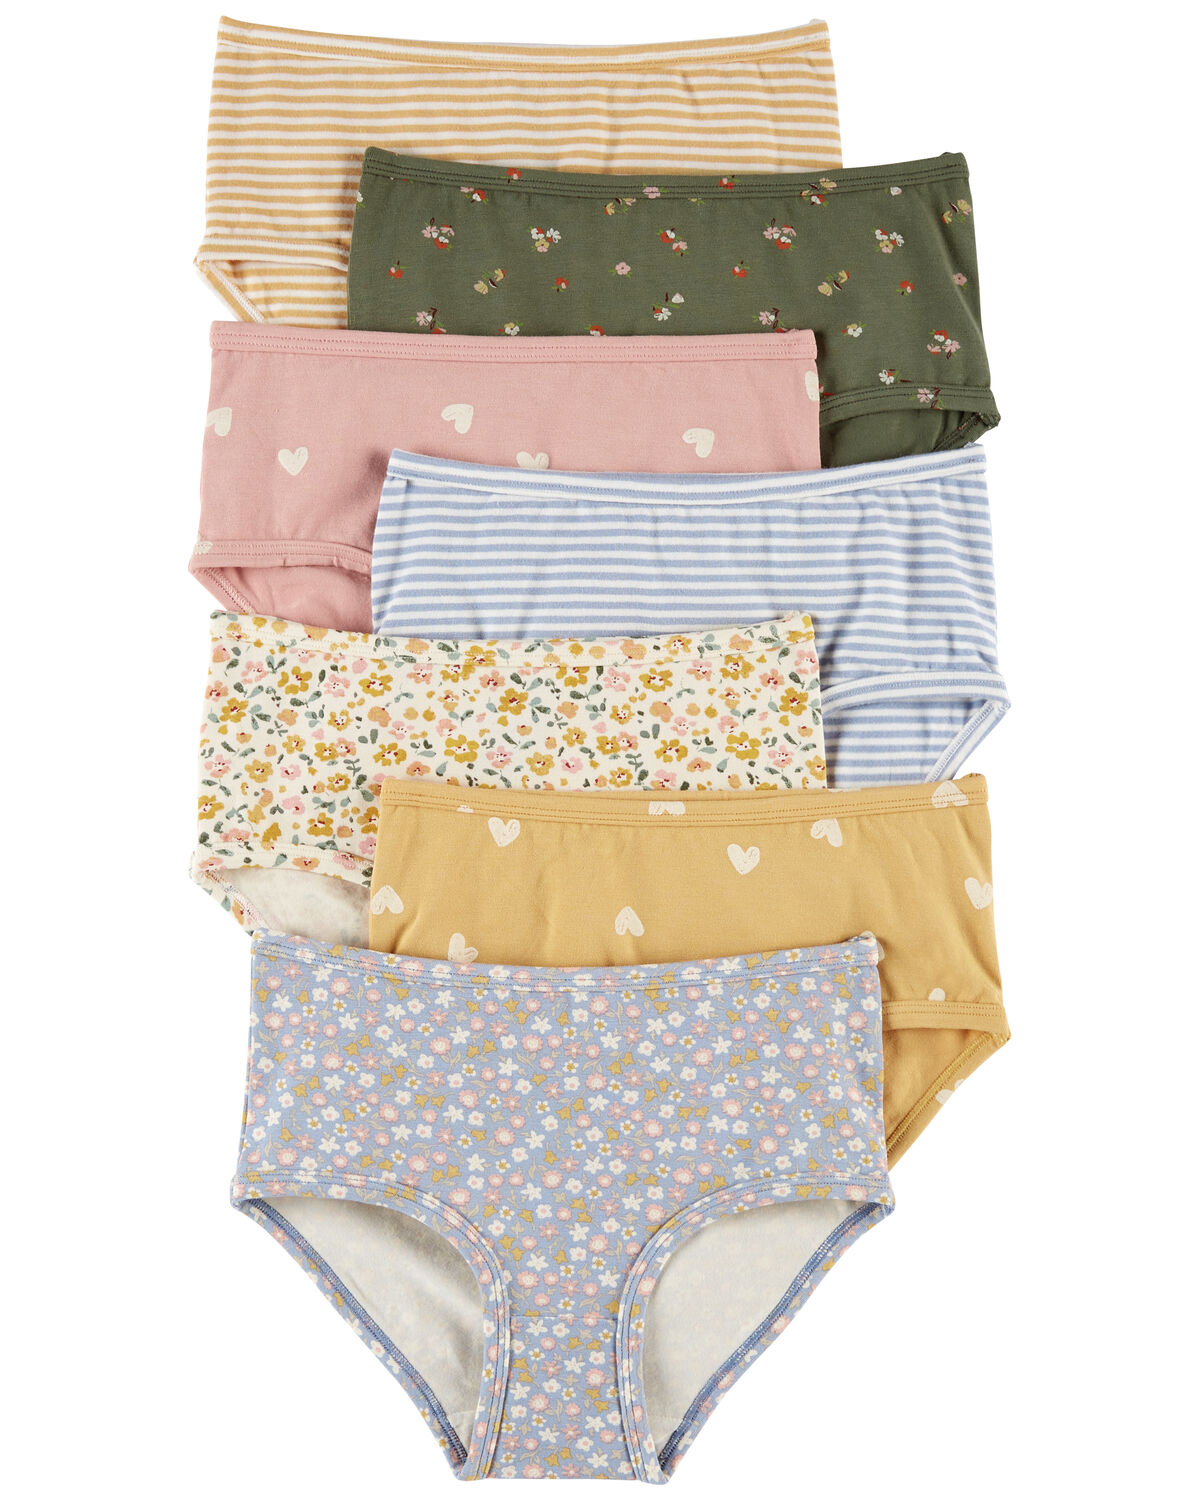 Disney Minnie Mouse Cotton Underwear Briefs 7 Pack Panty Girls Toddler Size  4t for sale online